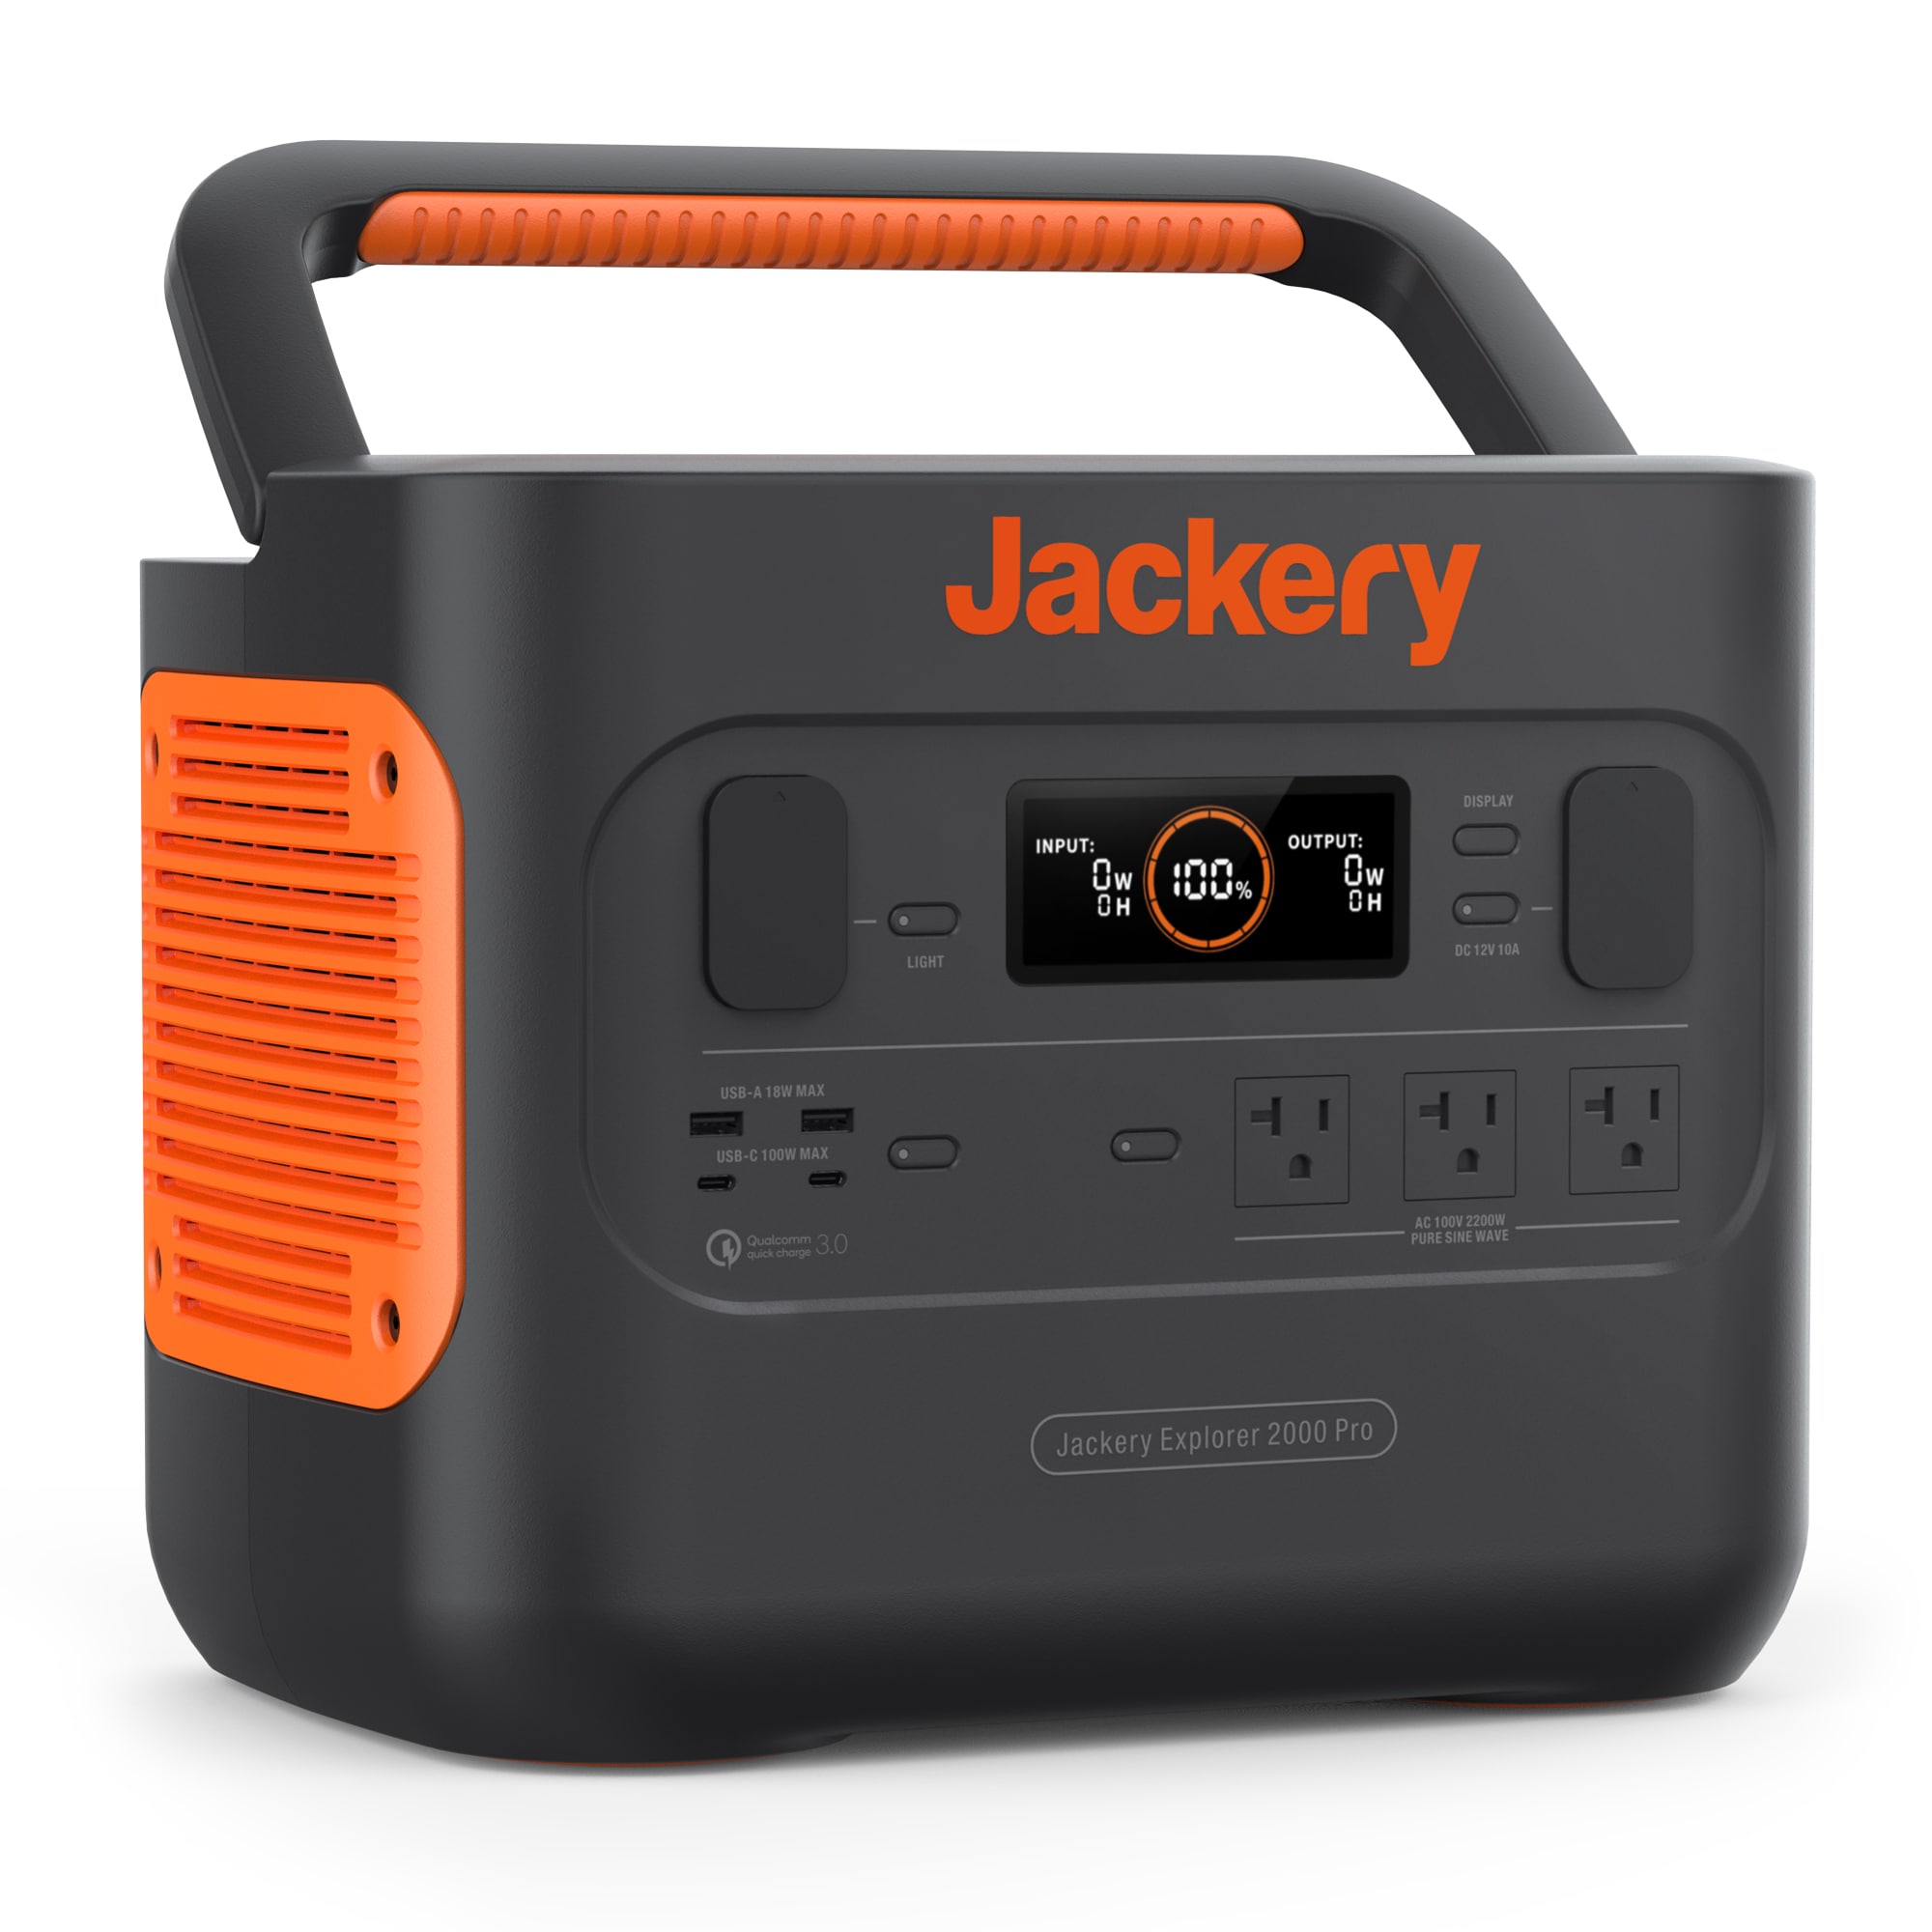 Jackery Explorer 2000 Pro (2160Wh) 2200-Watt Portable Power Station